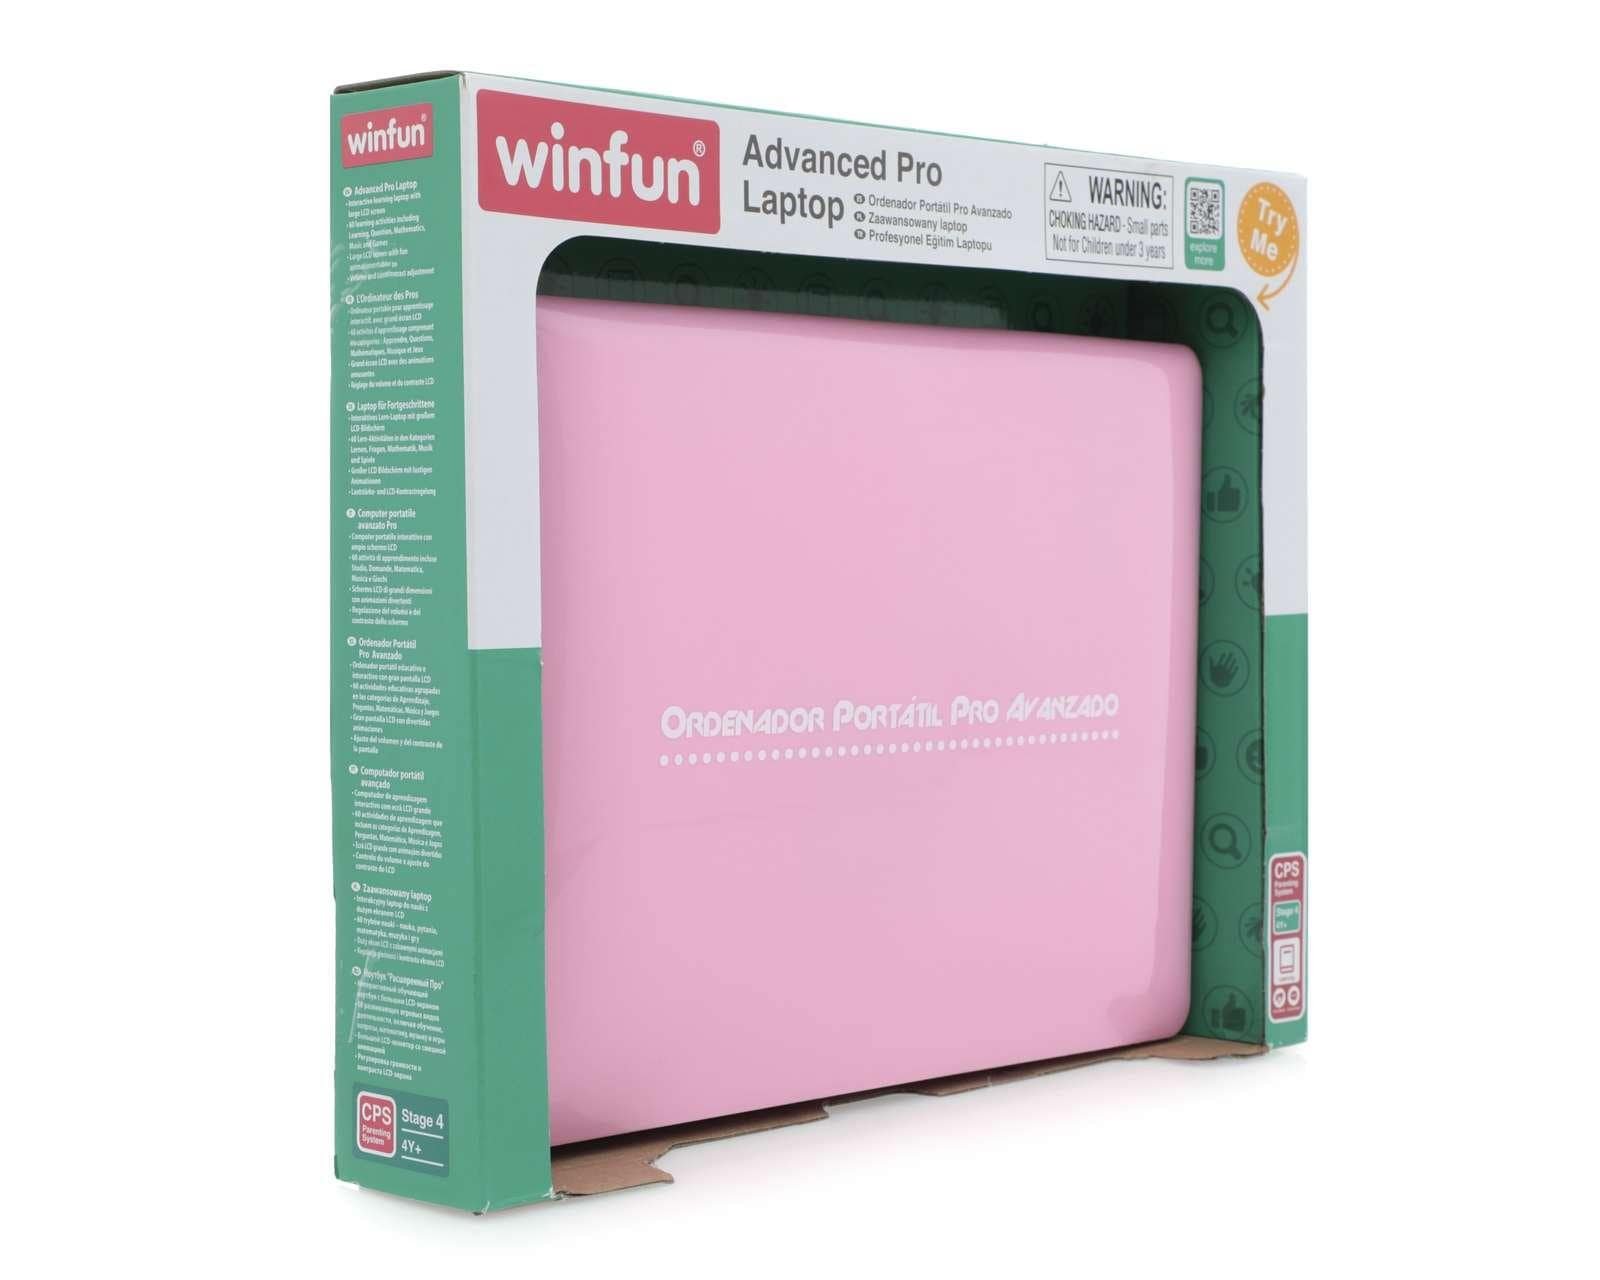 Laptop Educativa tablet infantil WinFun computadora rosa